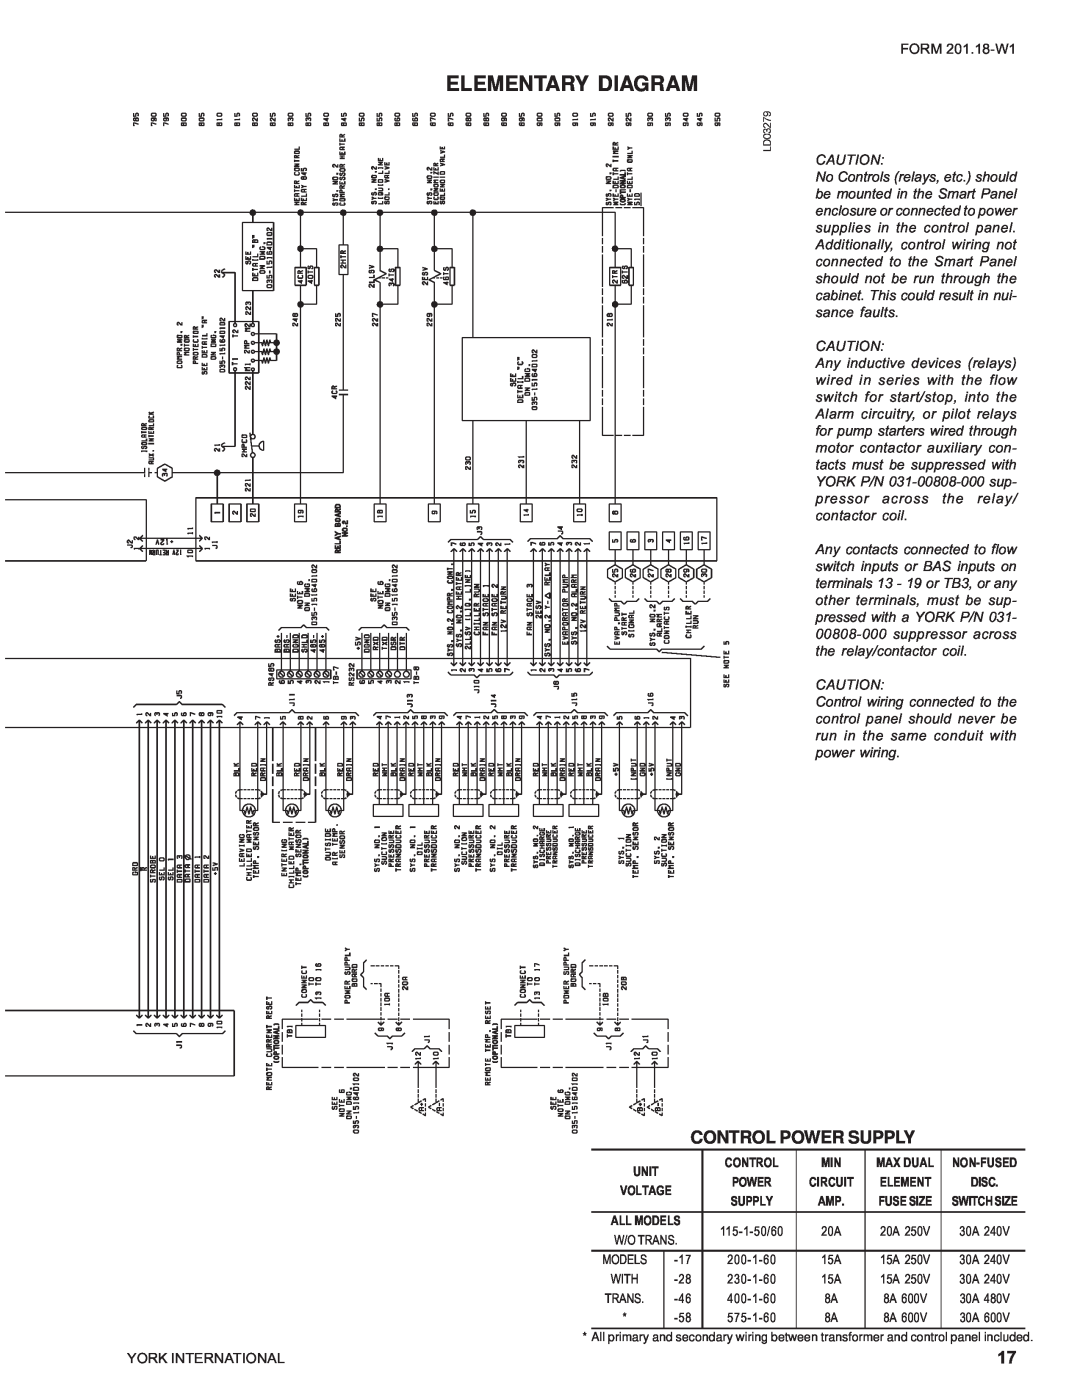 York YCAS0230 manual Elementary Diagram, Control Power Supply 